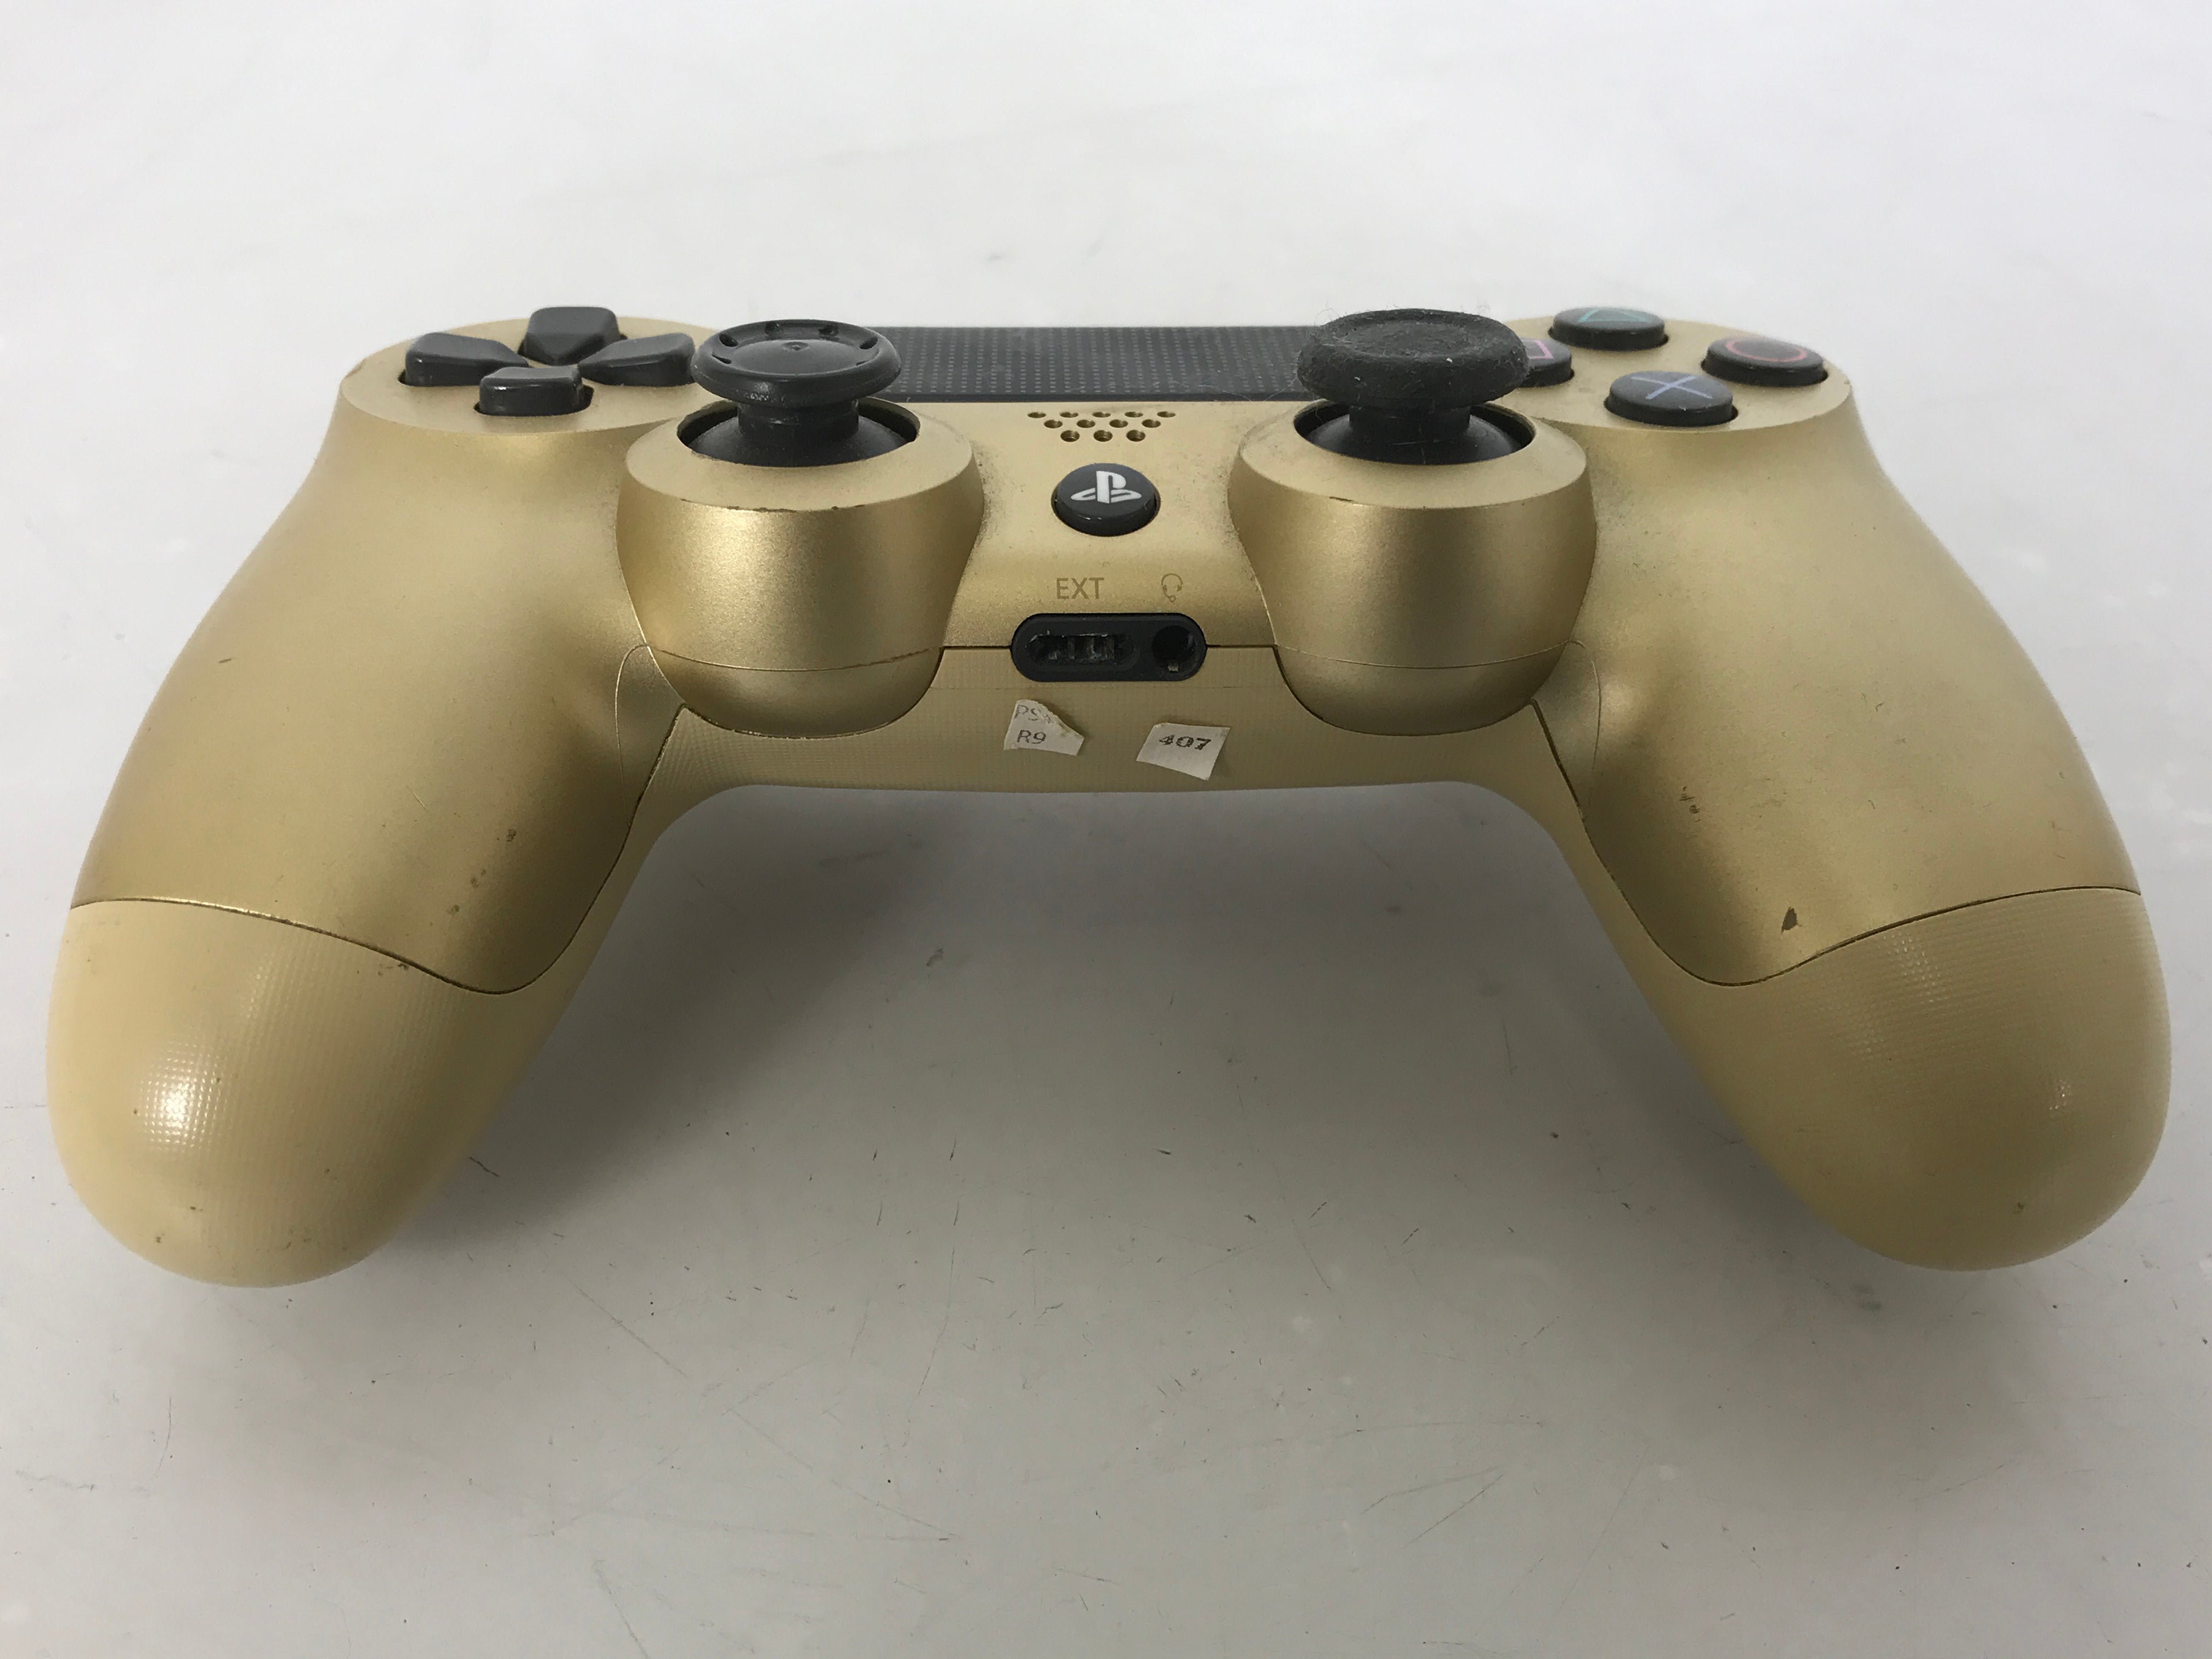 Sony PlayStation DualShock 4 Gold Wireless Controller